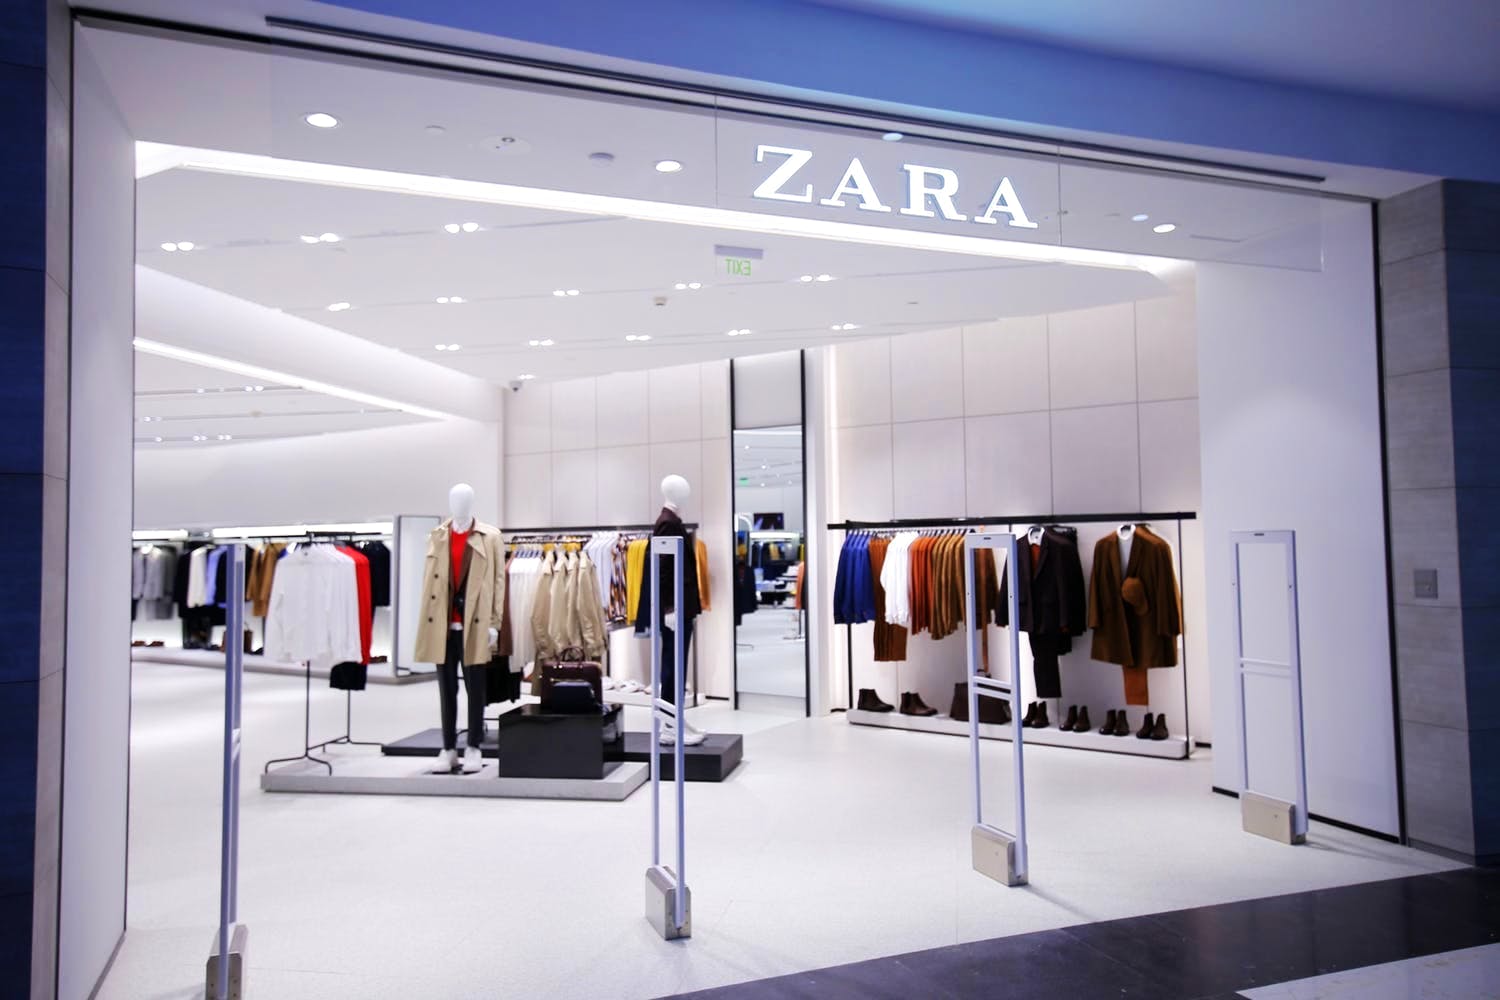 Visit Zara For High-Street Fashion 